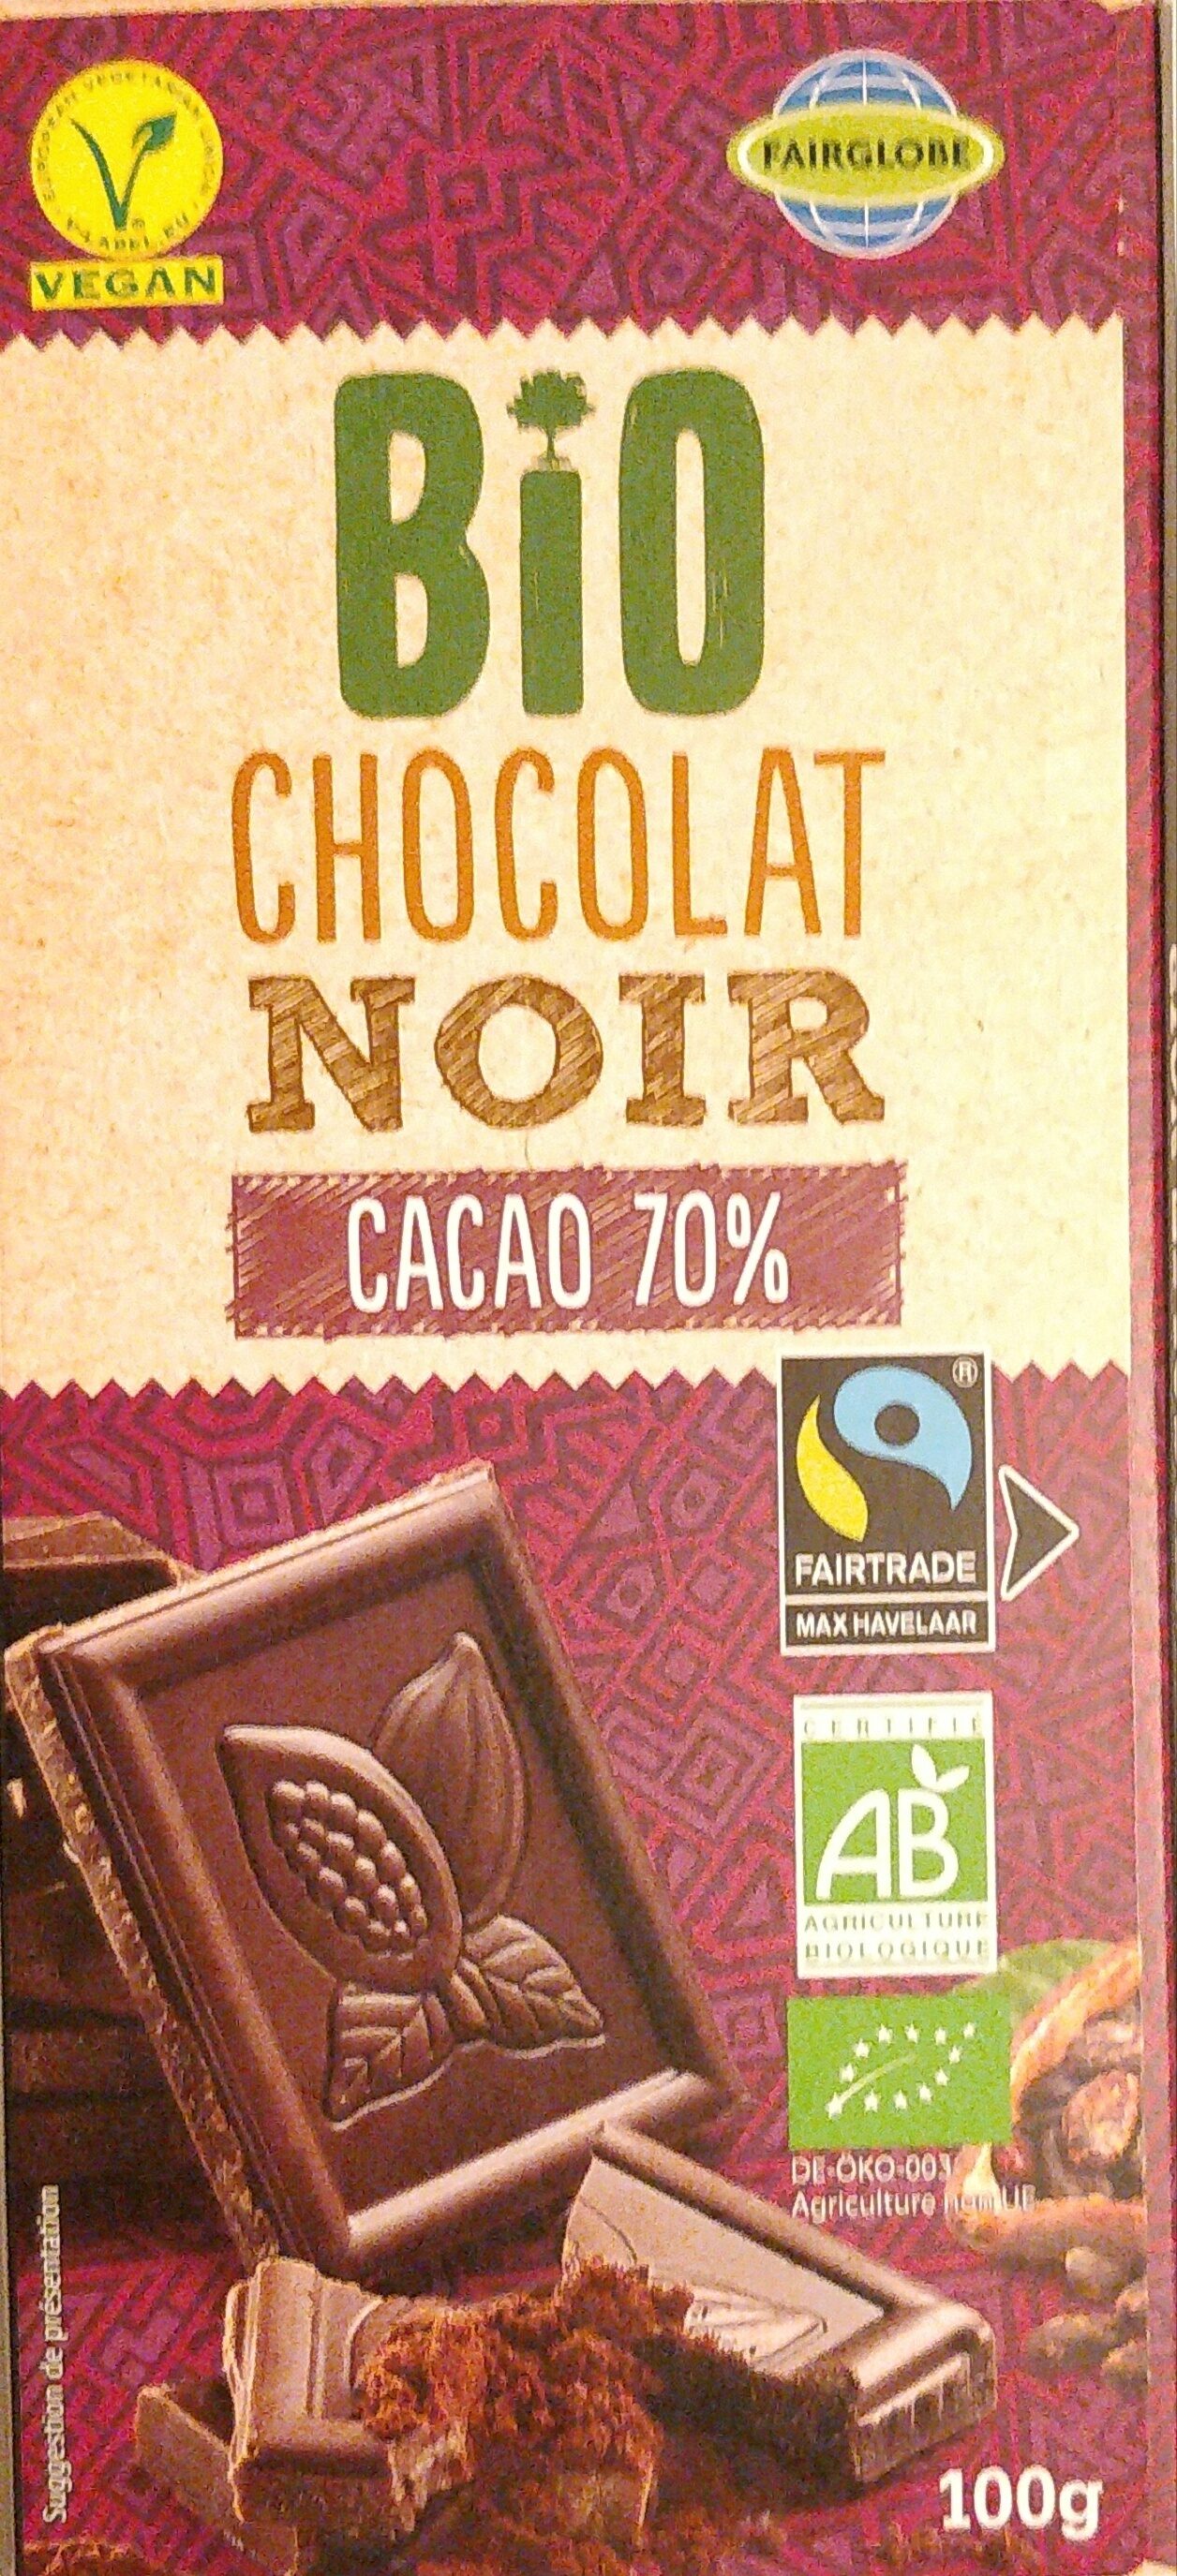 Chocolat noir bio cacao 70% - Product - fr